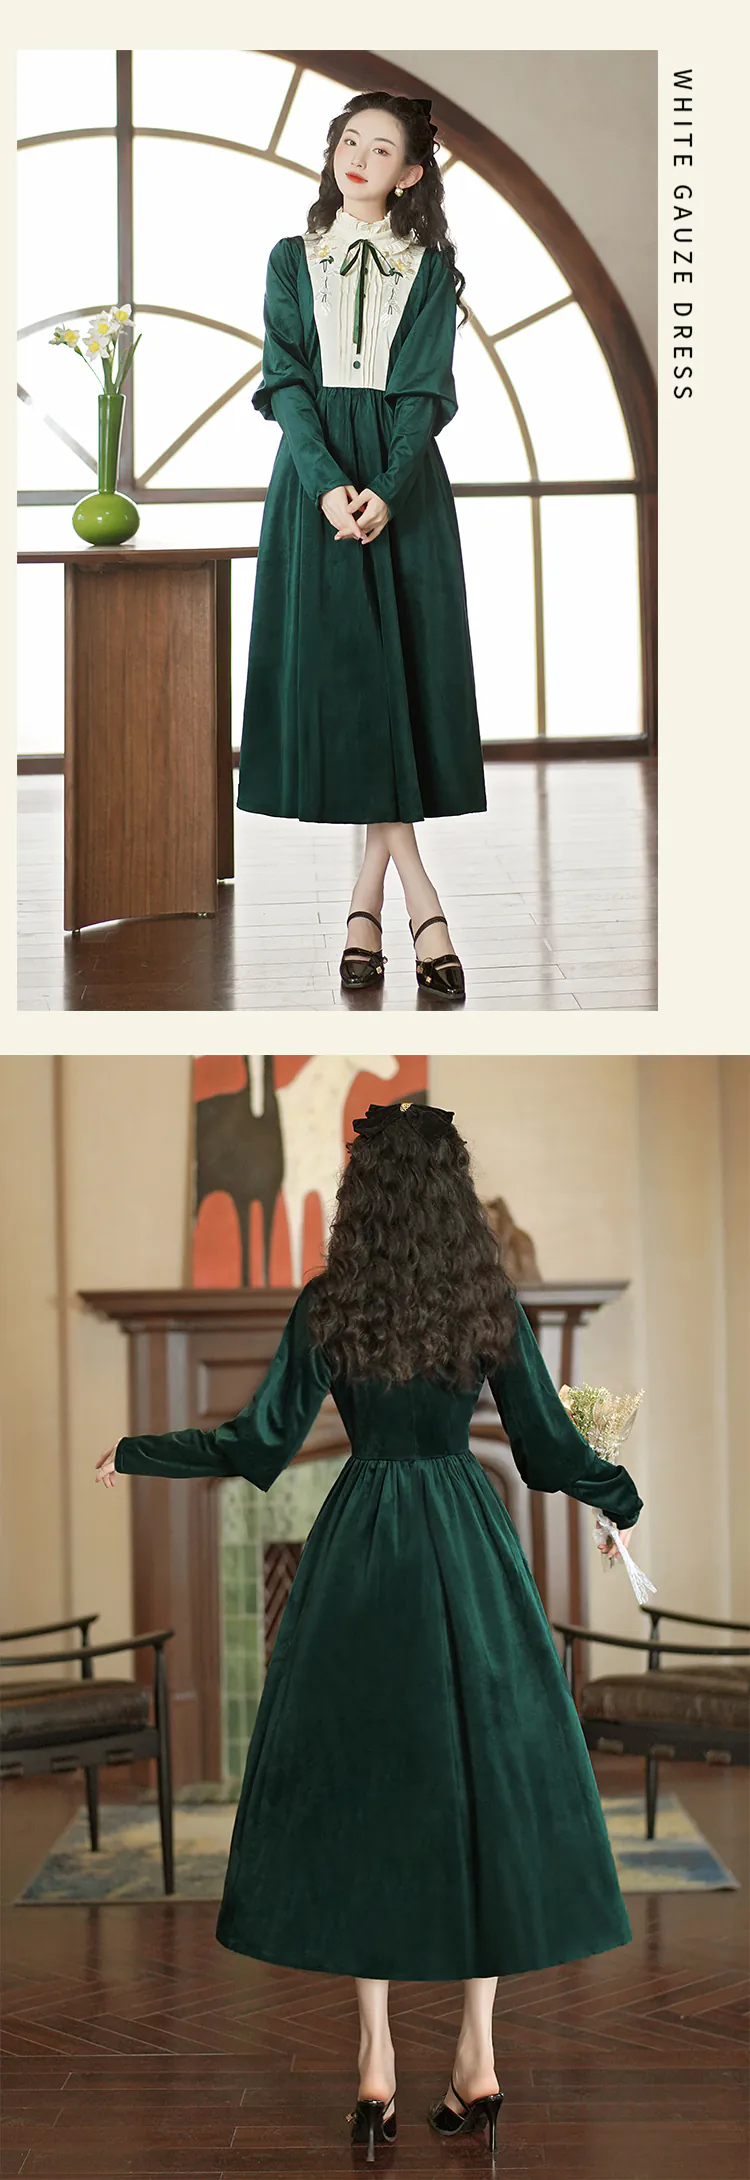 Chic-Vintage-Style-Green-Velvet-Ruffle-Neck-Long-Sleeve-Casual-Dress15